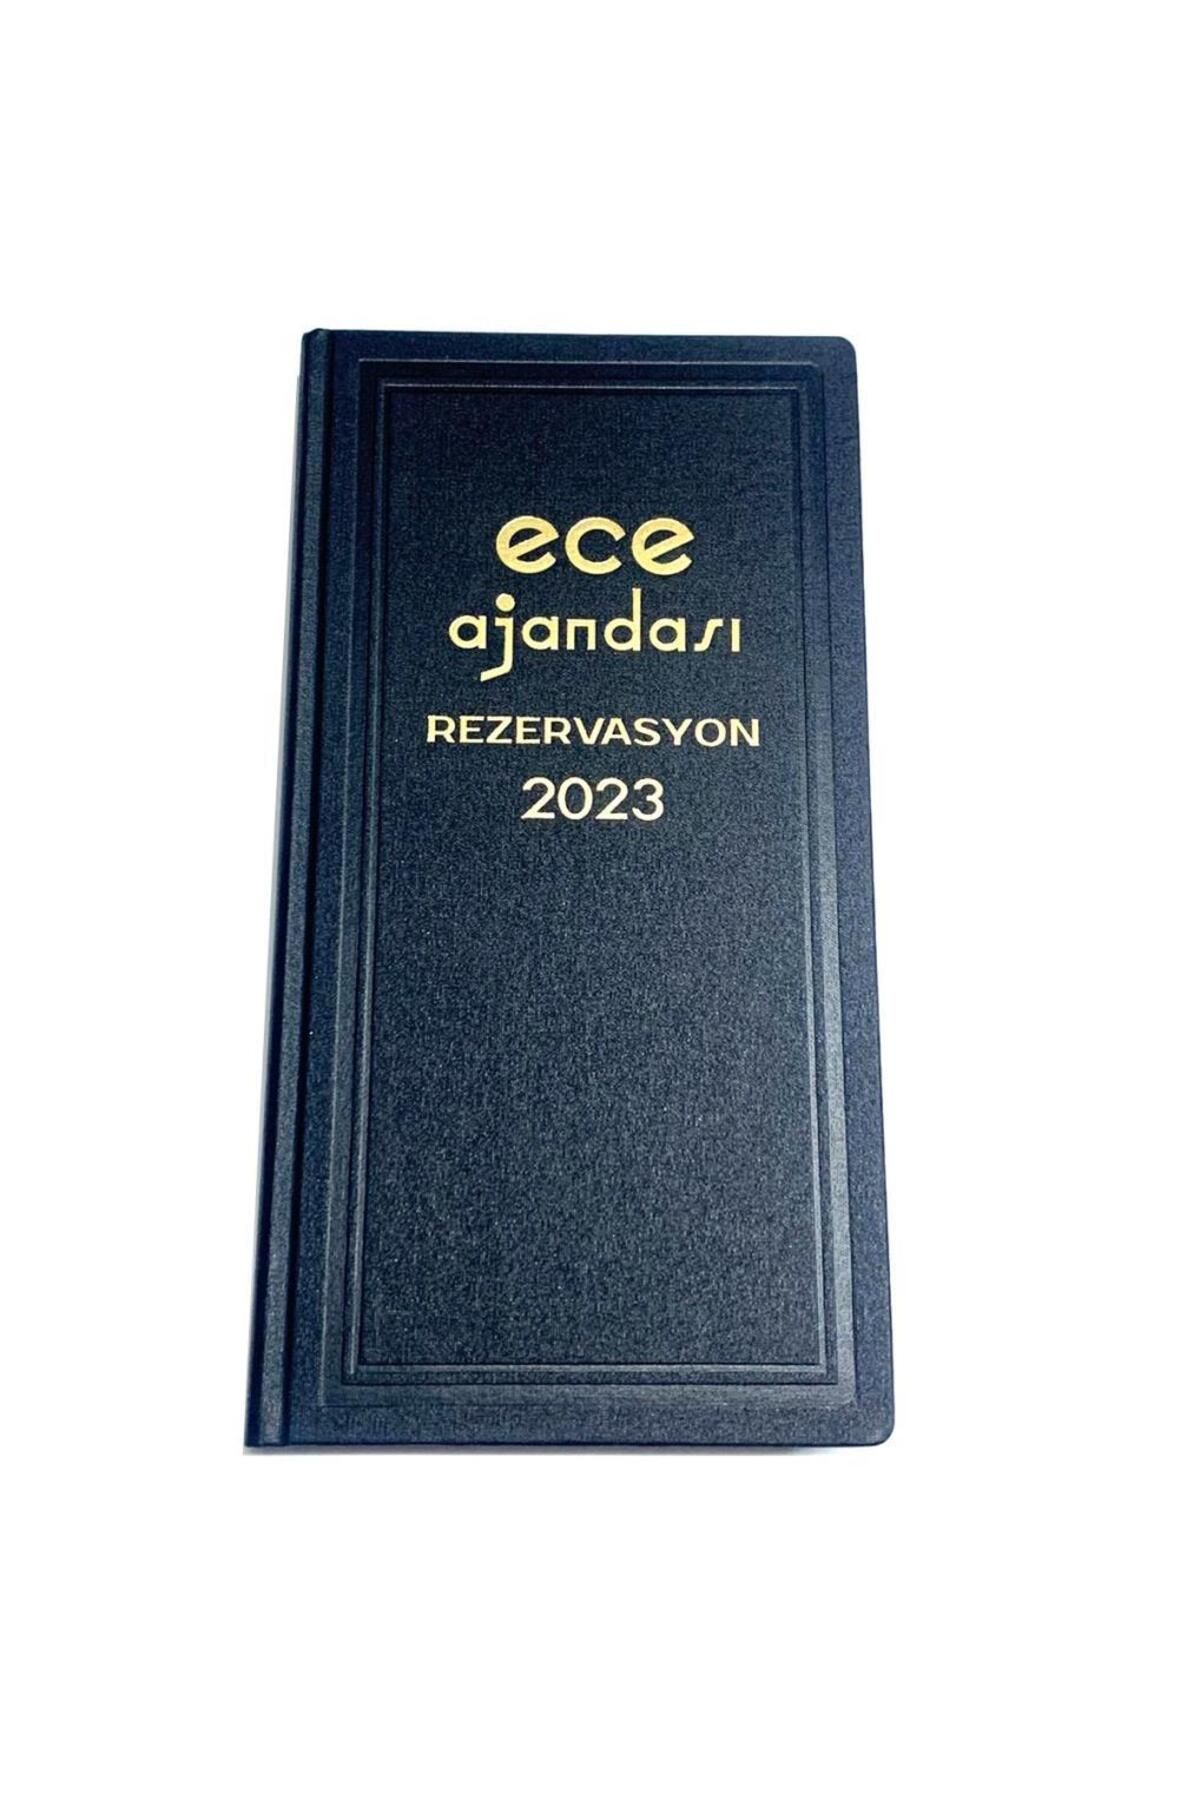 Ece 2024 Agenda Eurasia Reservation 17x33 Cm Commercial Agenda Case Agenda